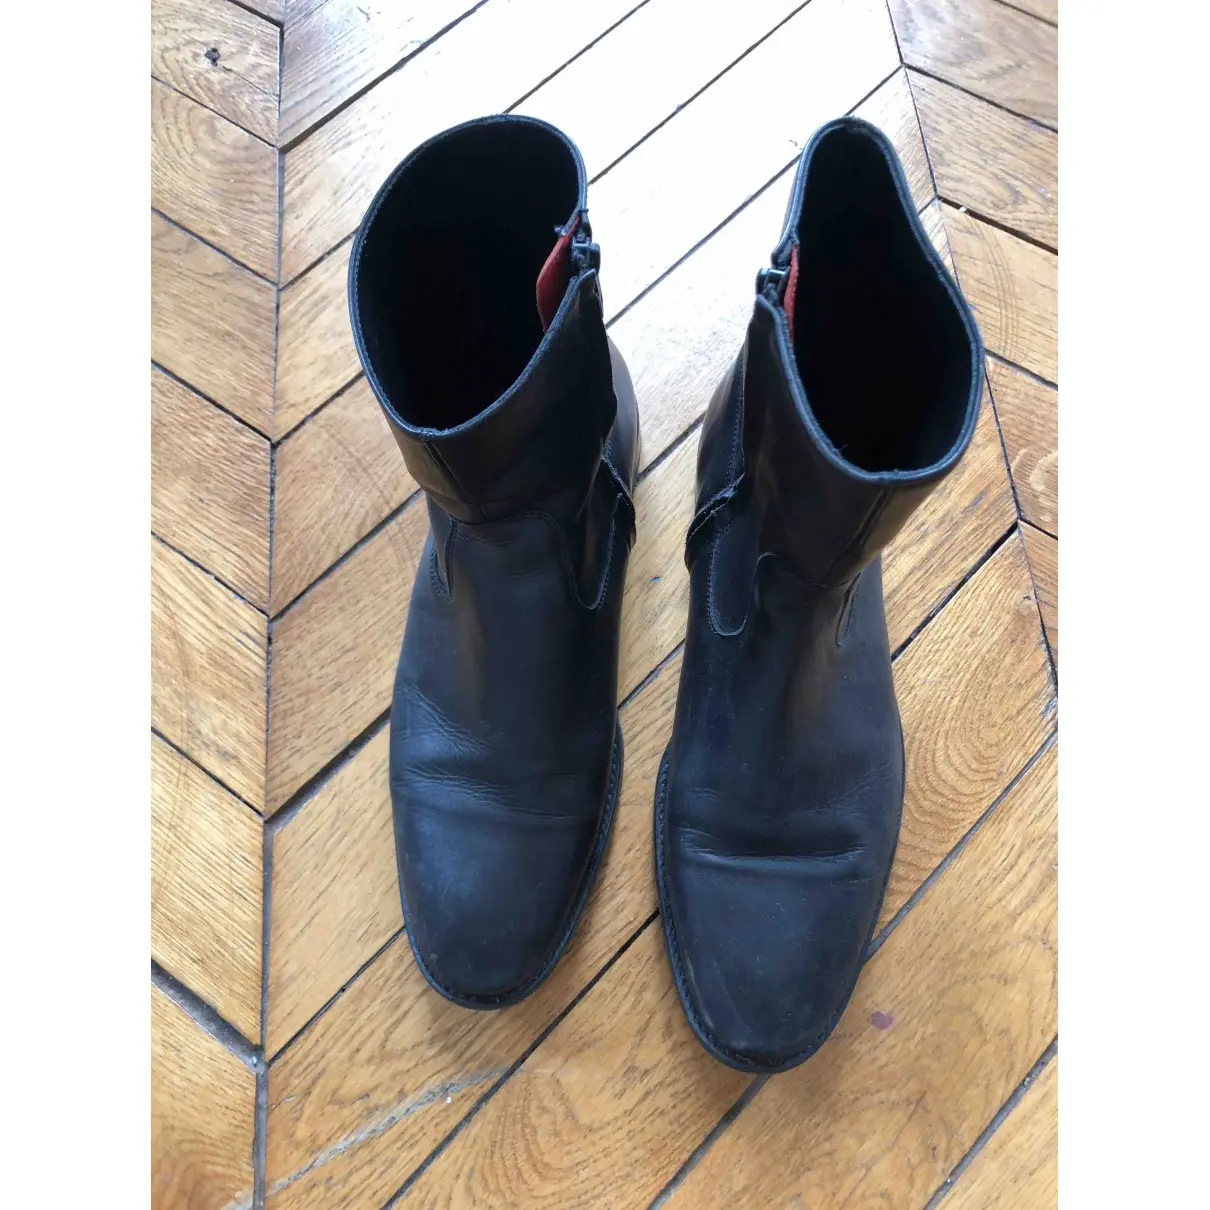 Buy Zadig & Voltaire Leather boots online